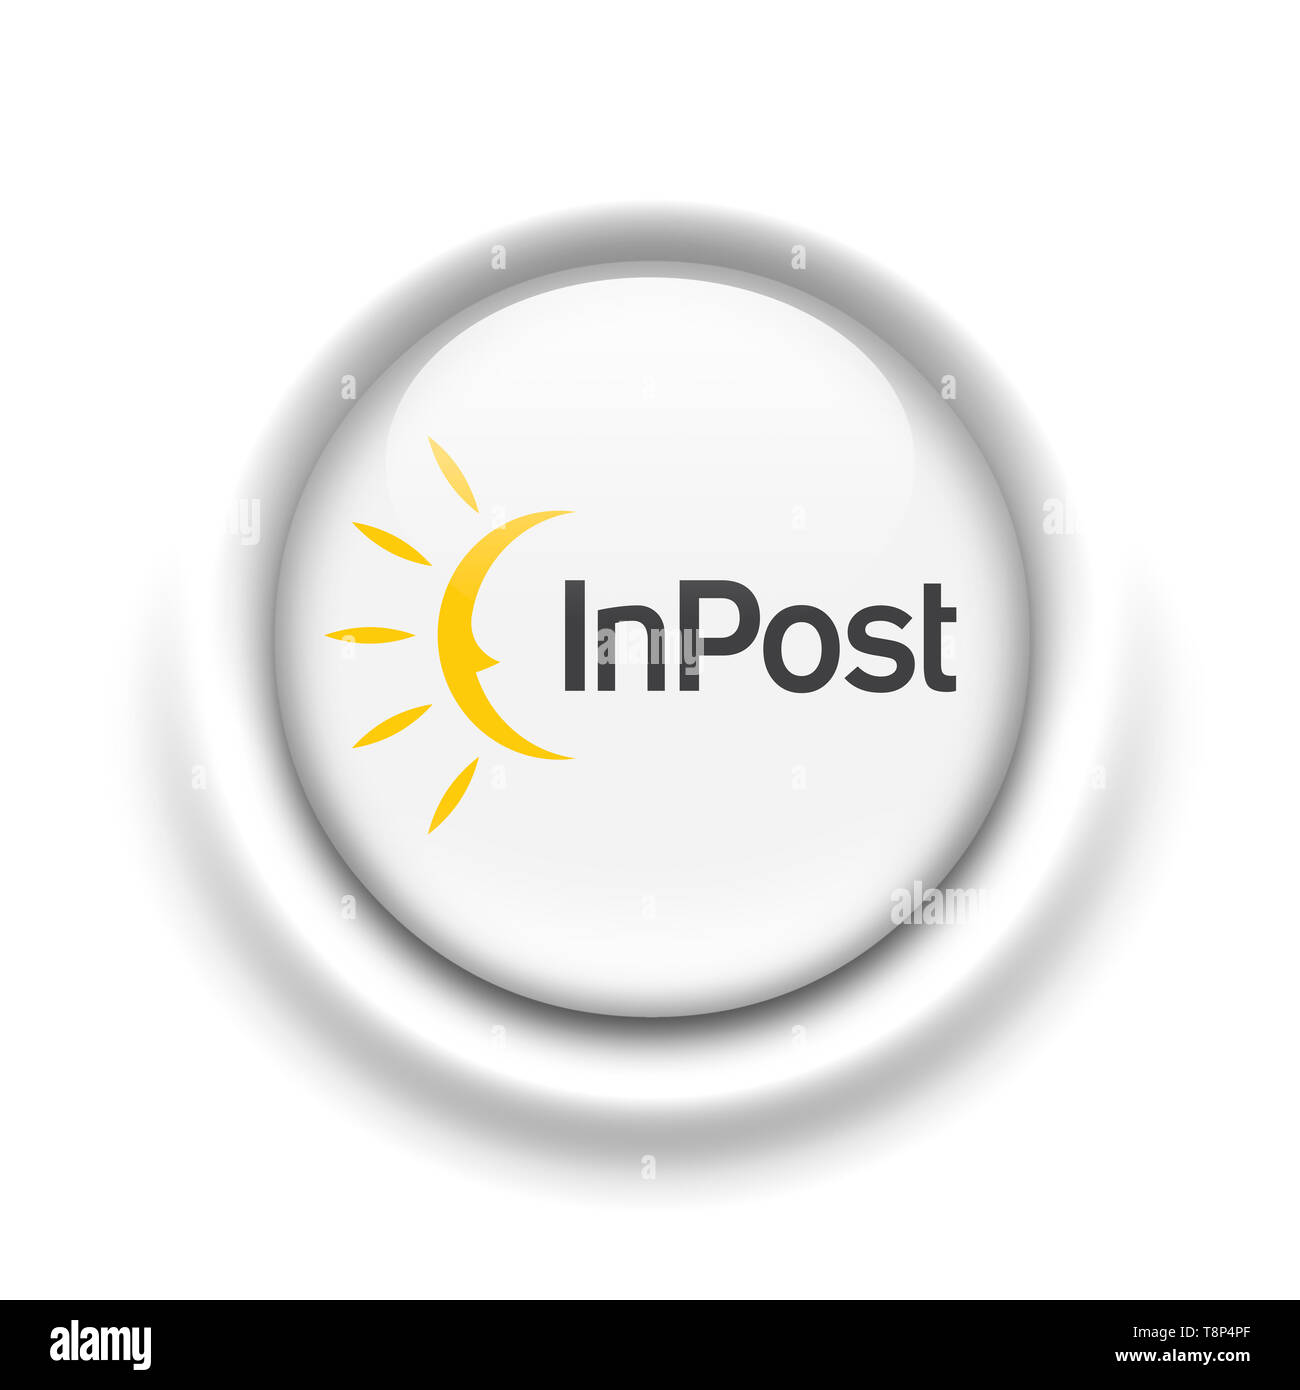 InPost logo Stock Photo - Alamy